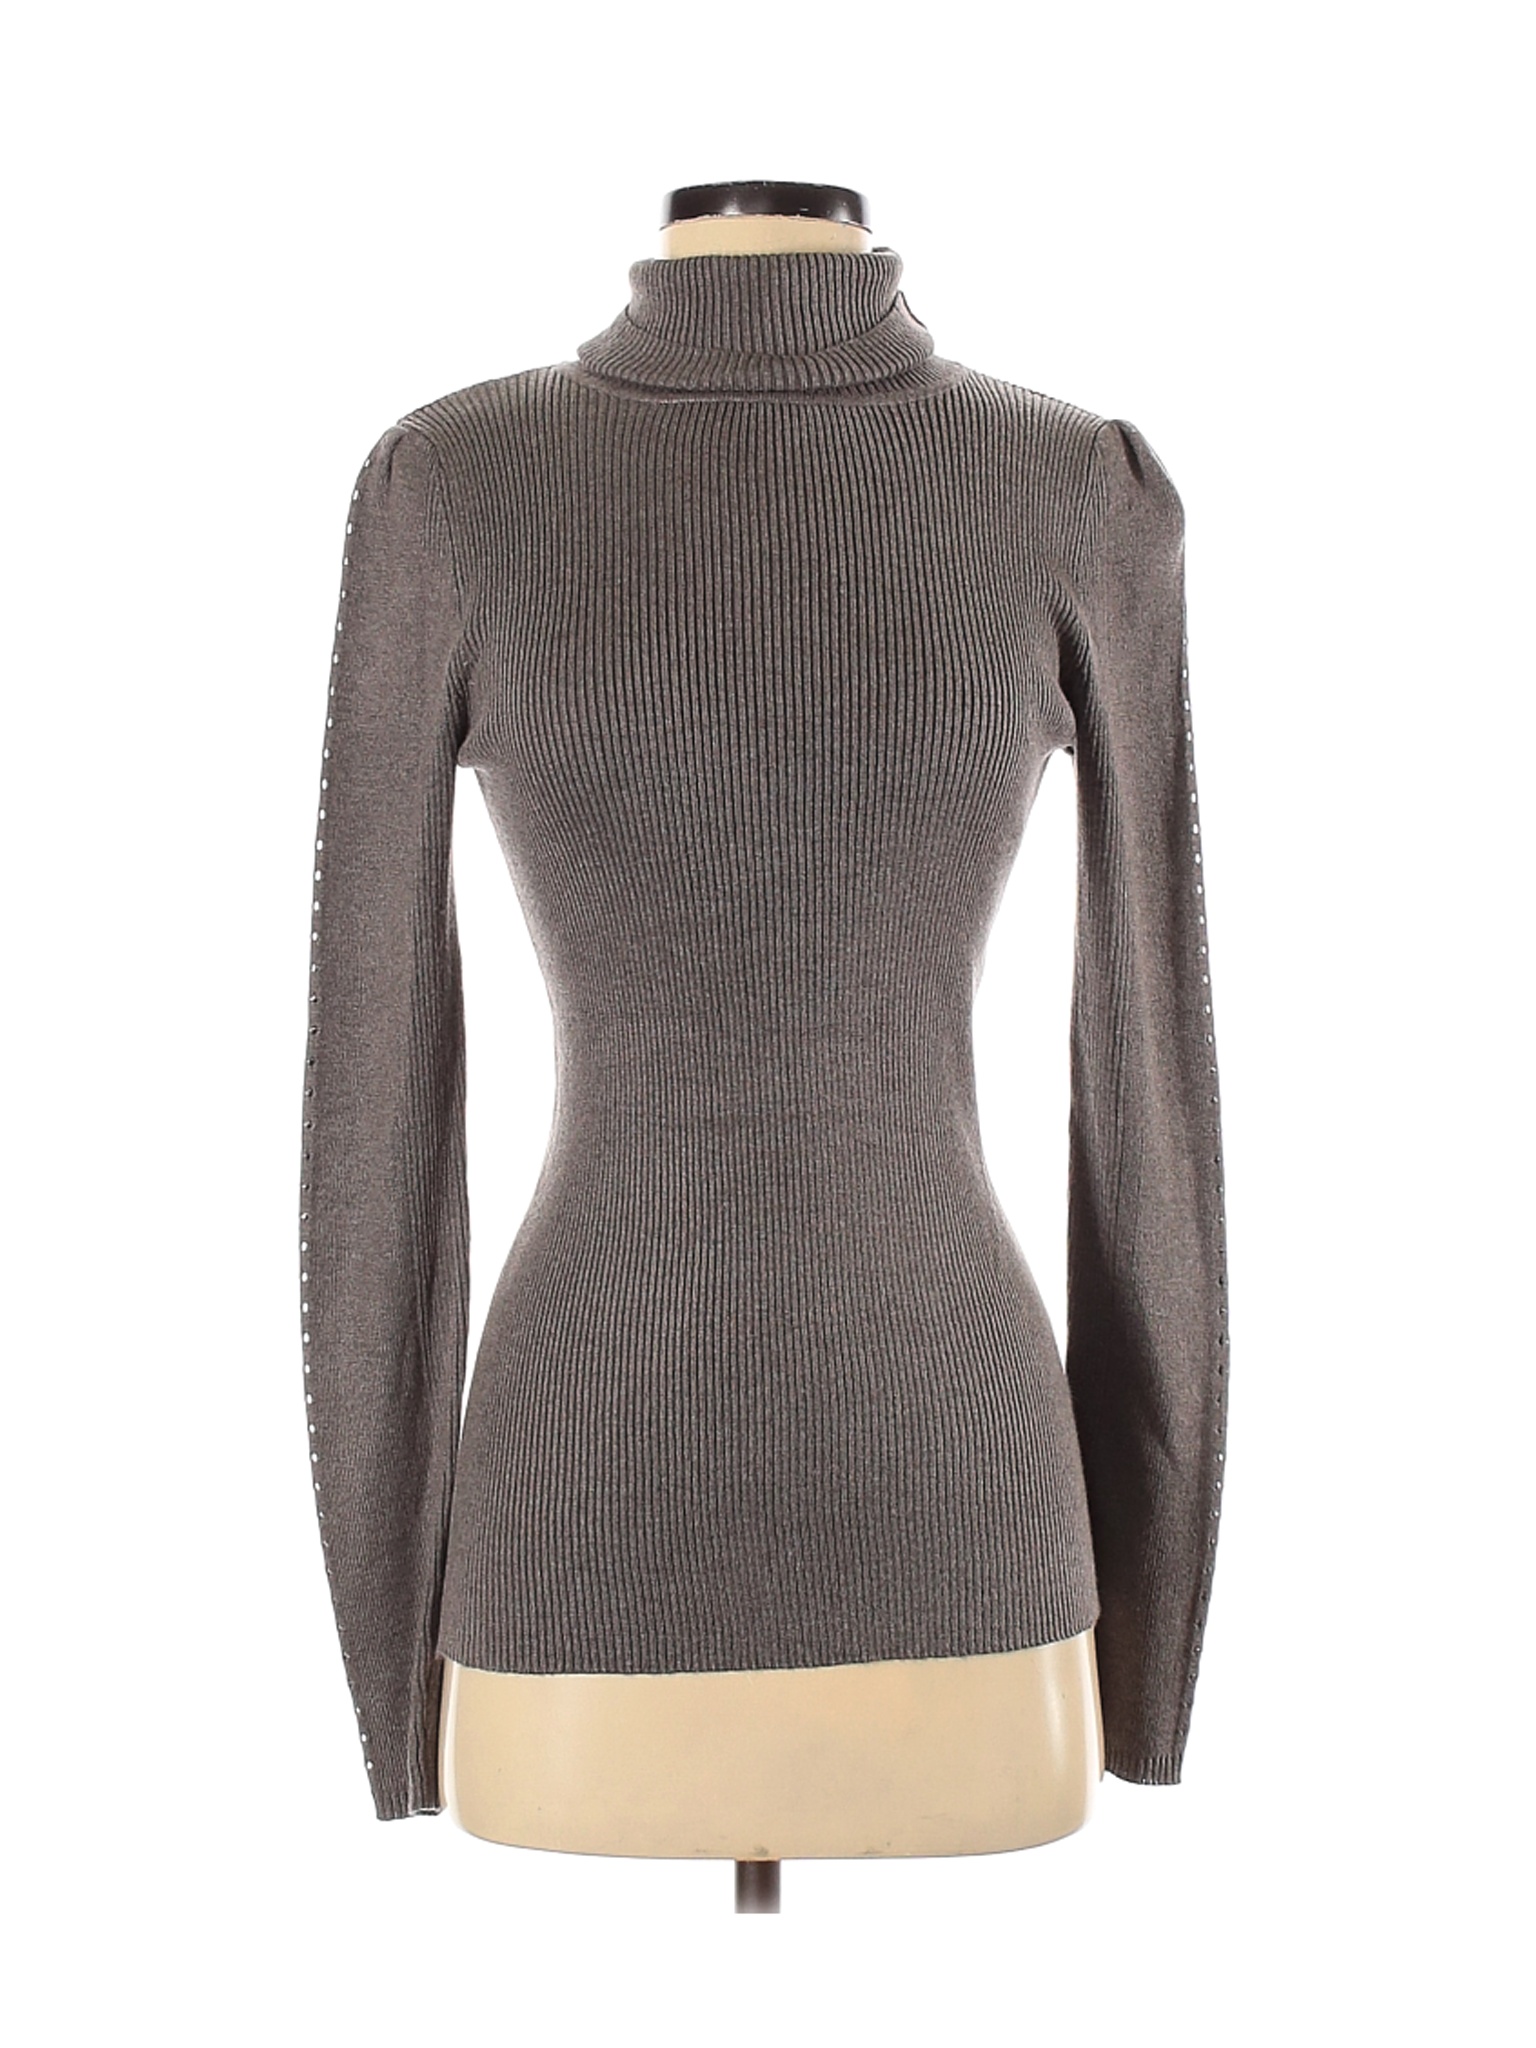 Philosophy Republic Clothing Women Gray Turtleneck Sweater S | eBay